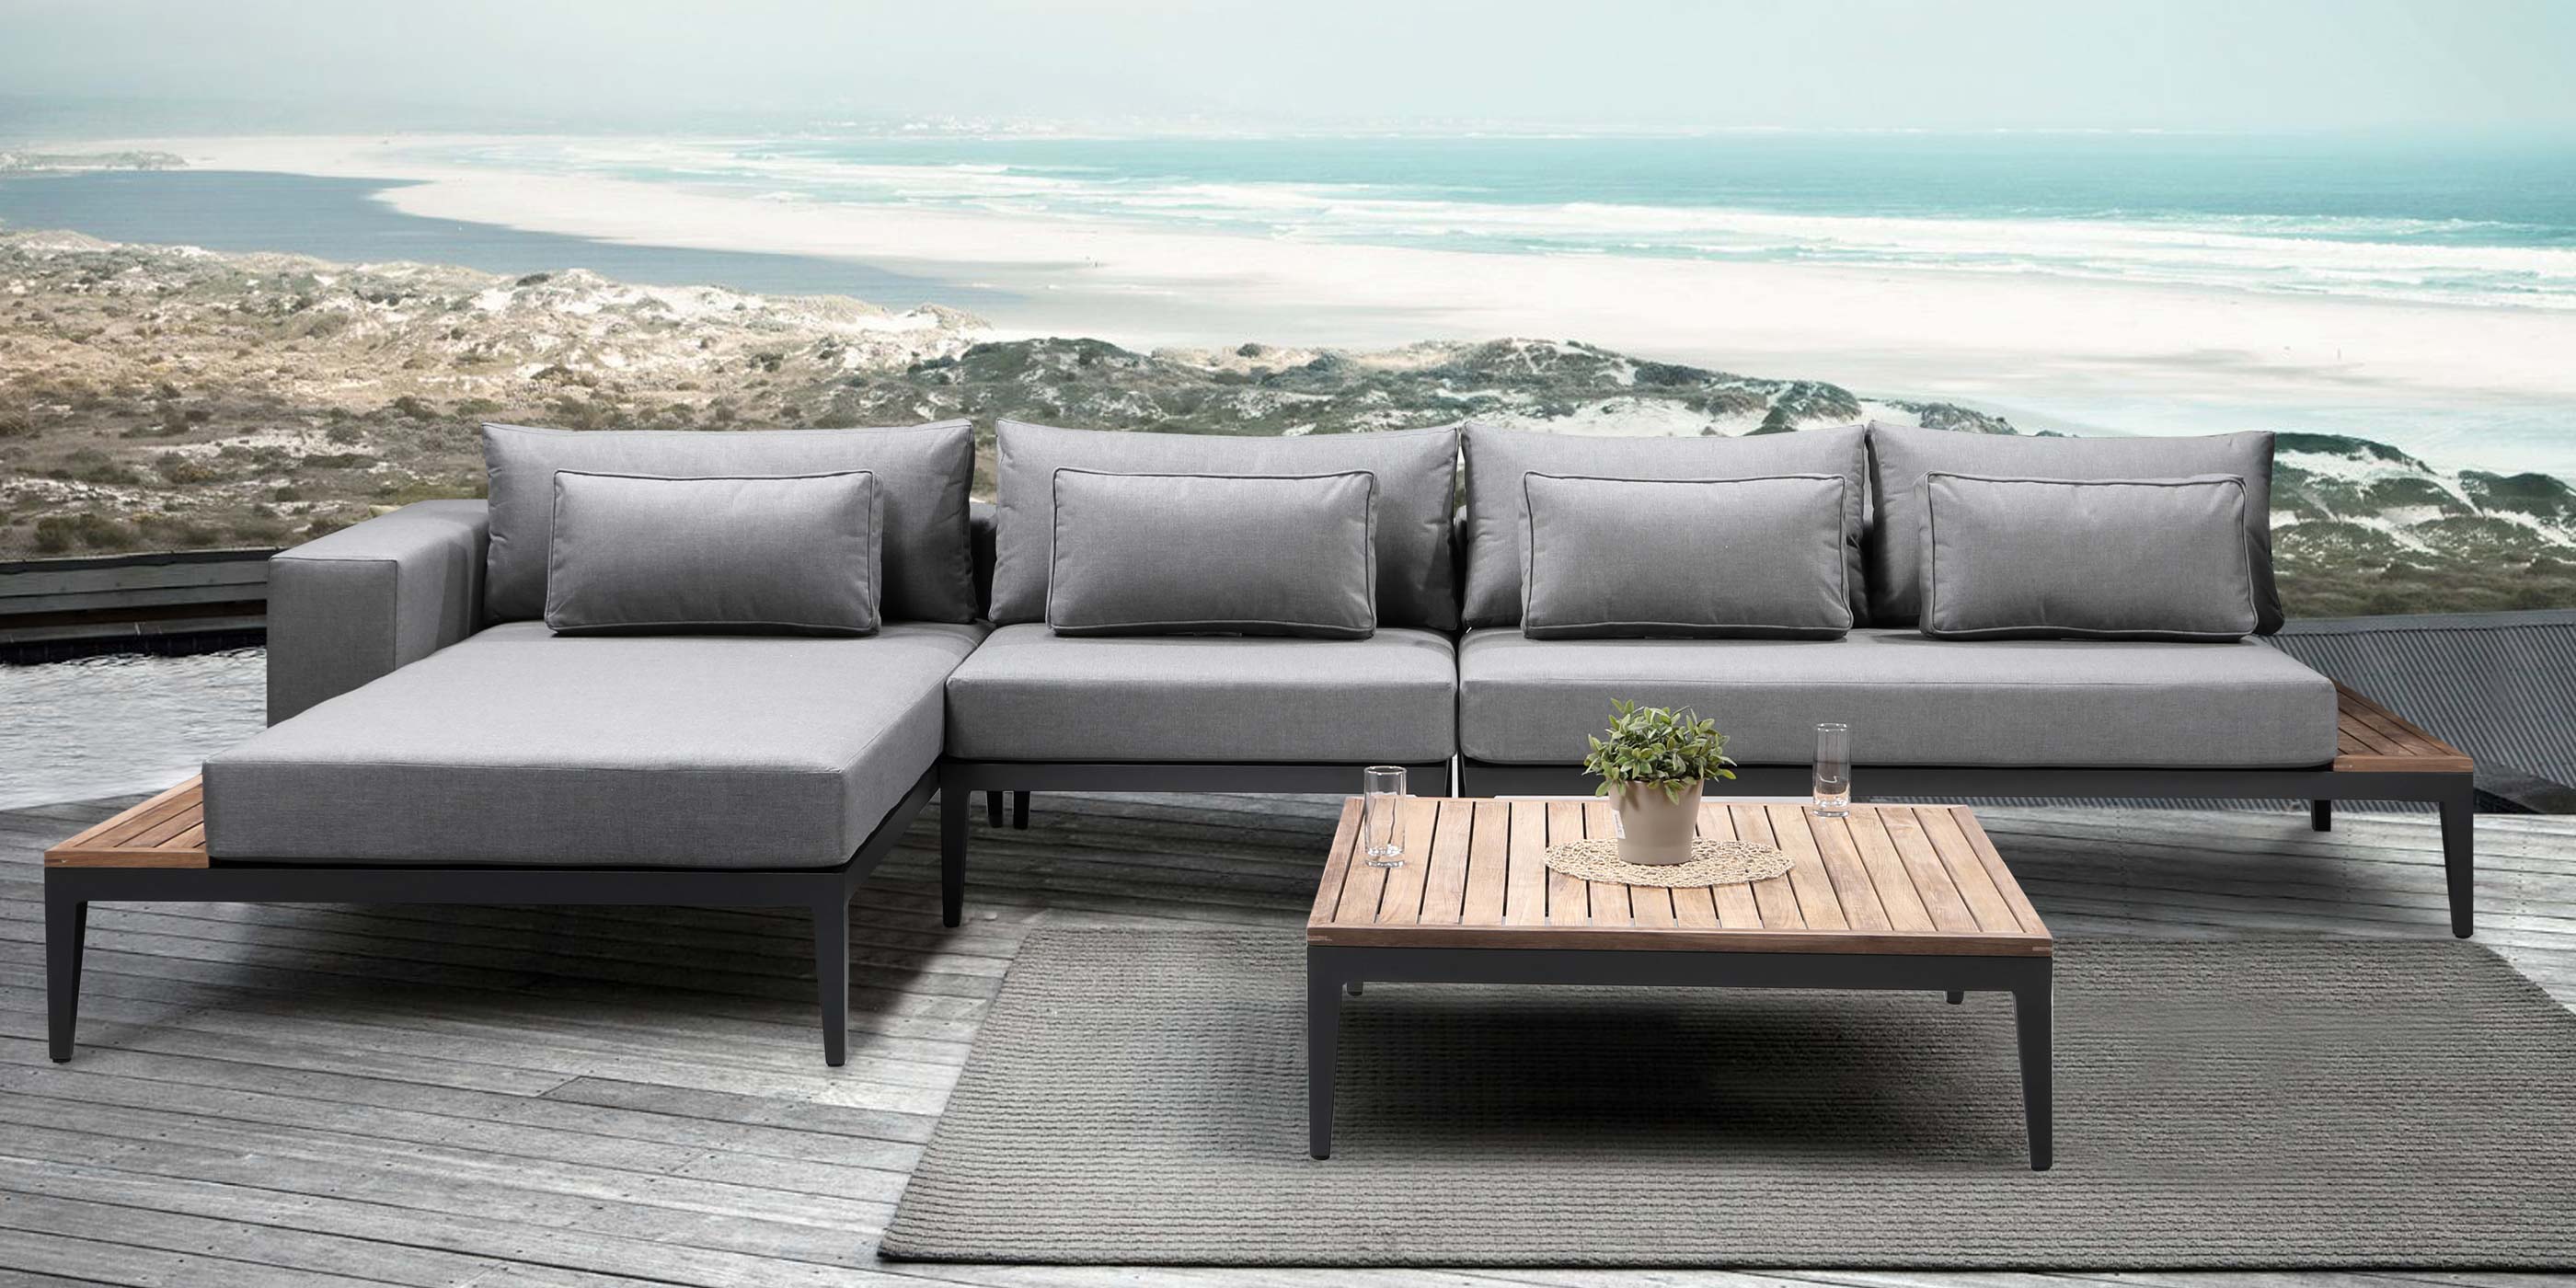 Moderno Outdoor Furniture Range | Alexander Francis